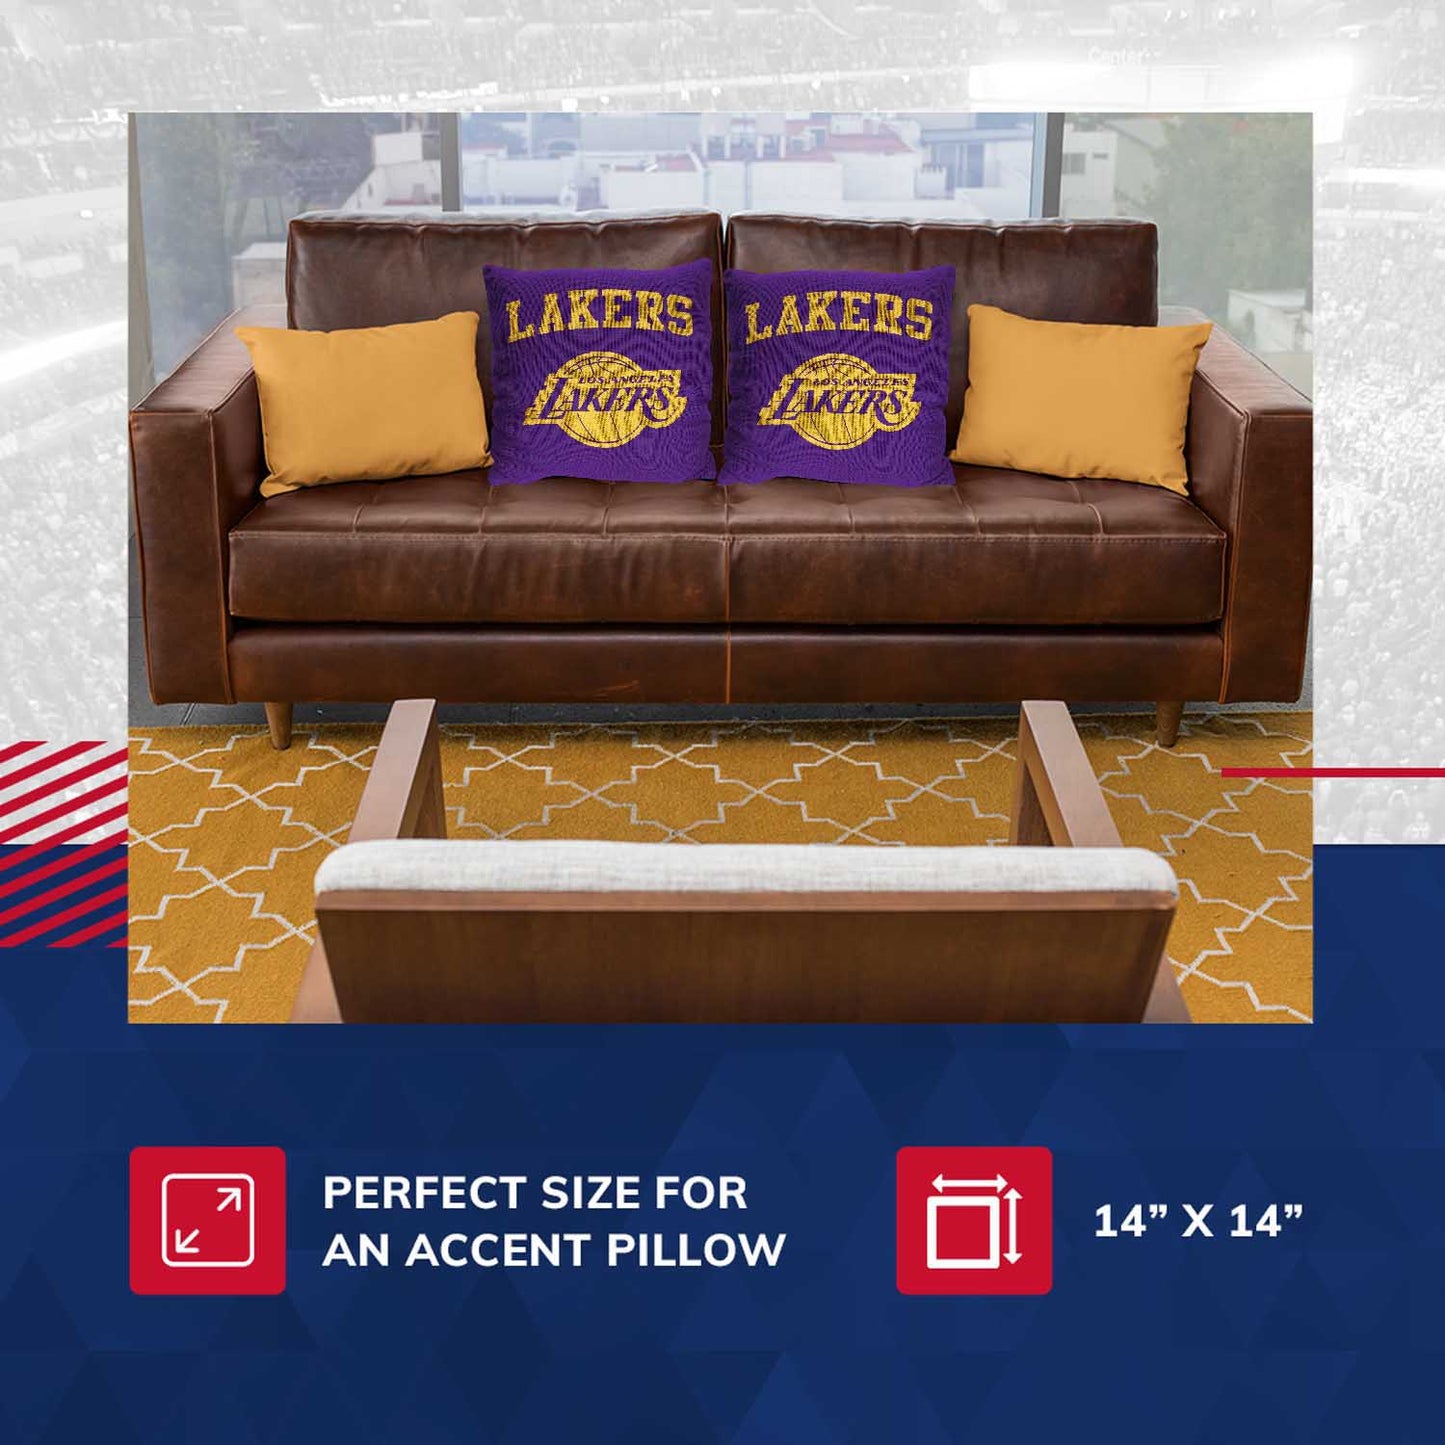 Los Angeles Lakers NBA Decorative Basketball Throw Pillow - Purple